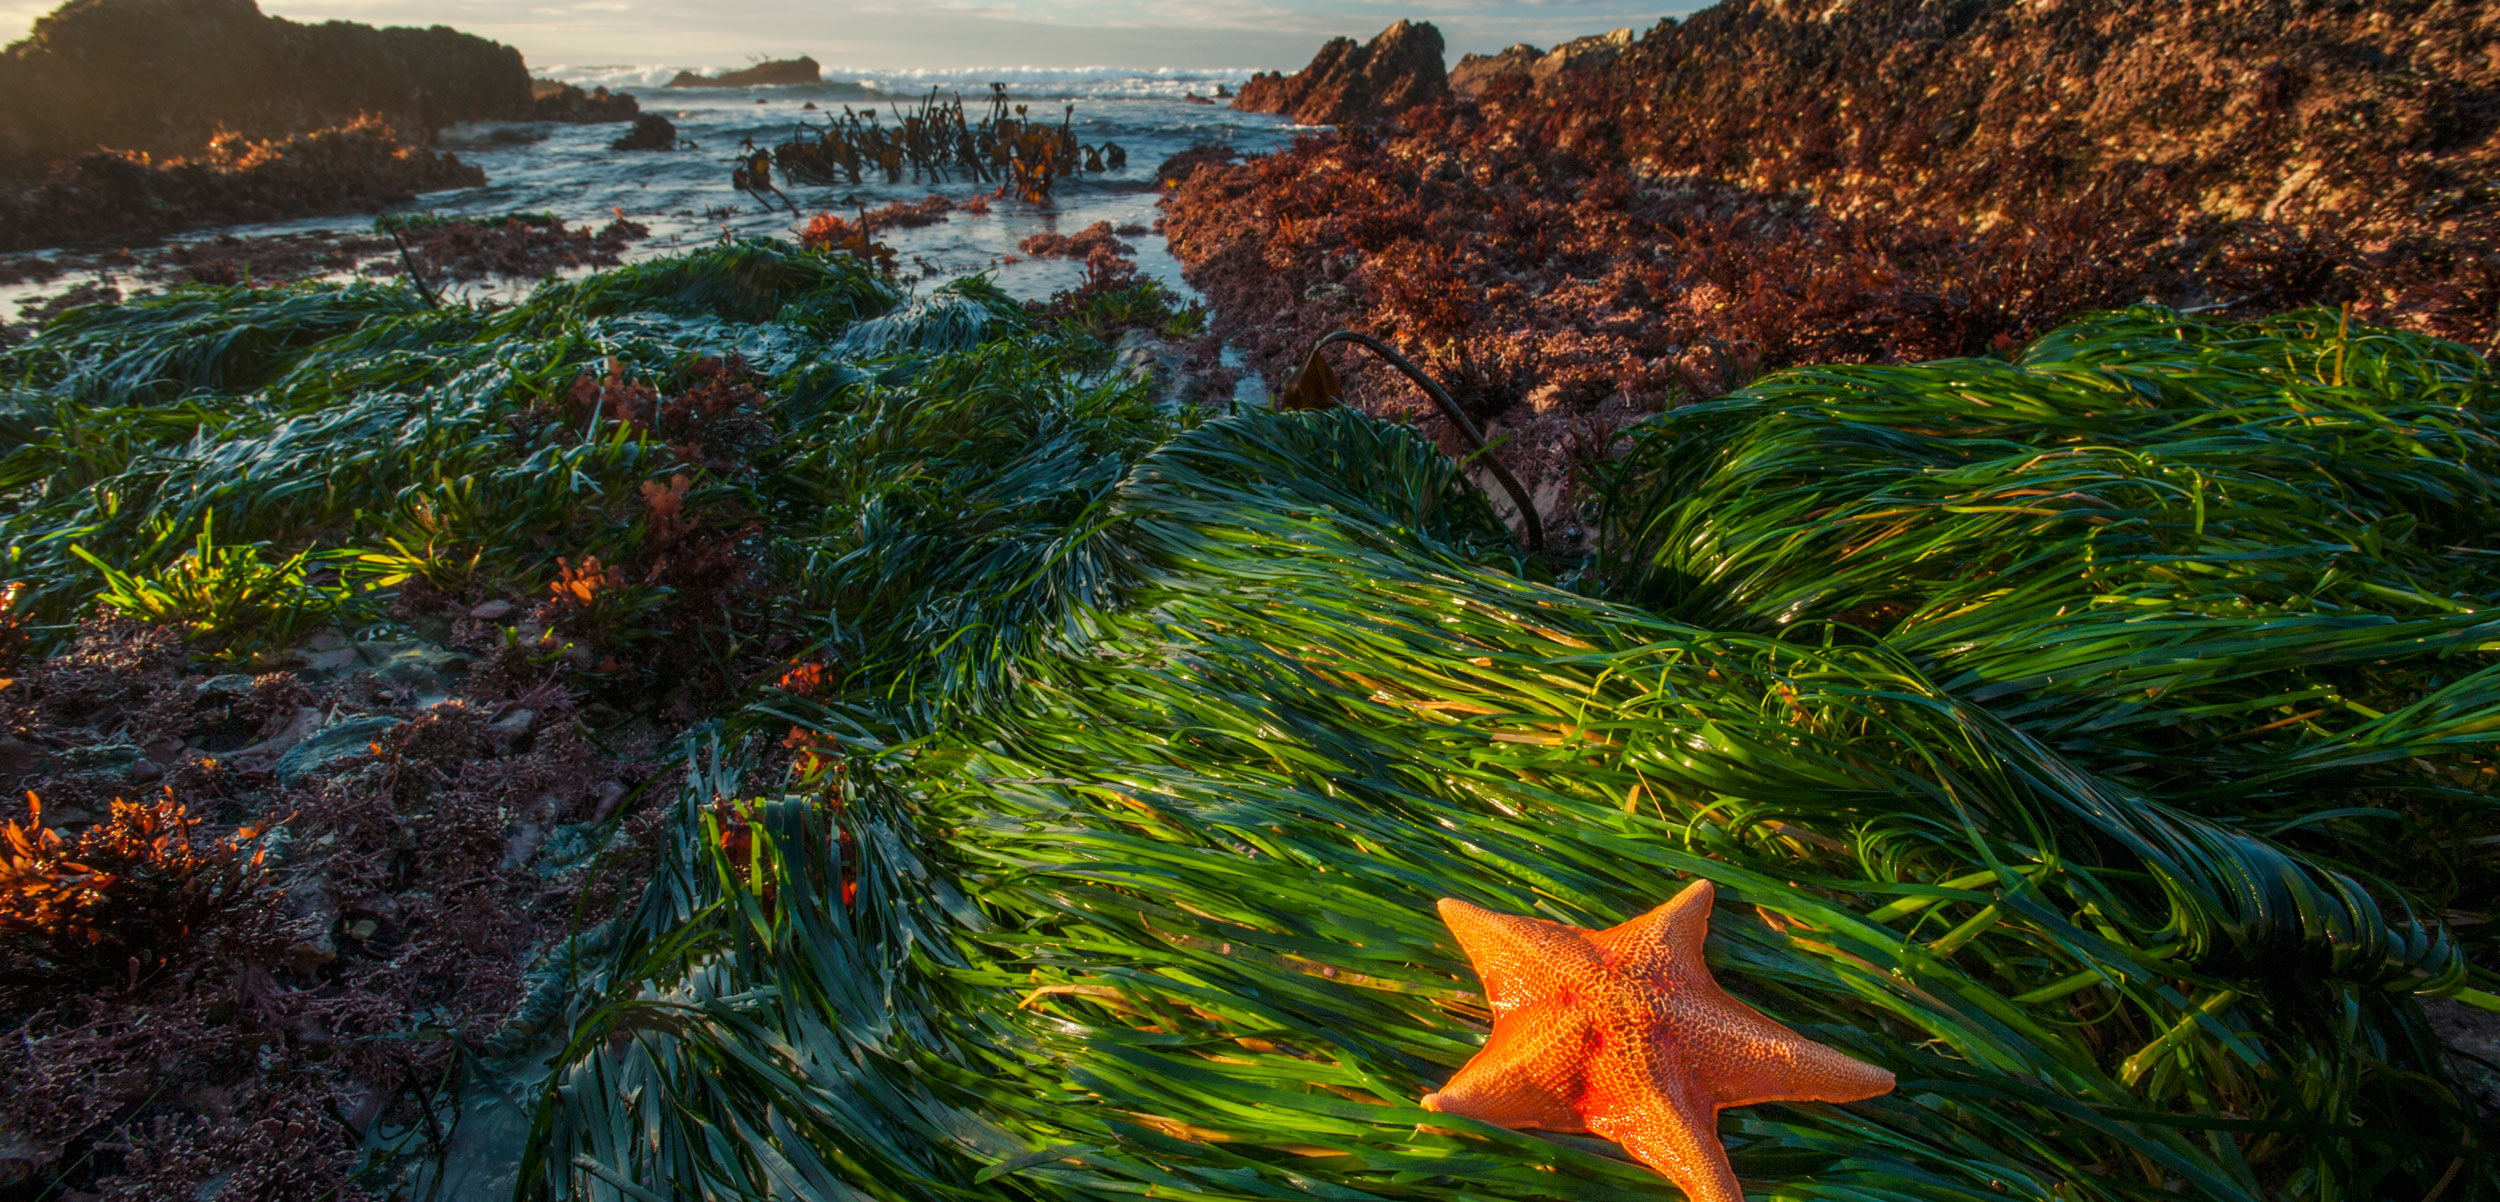 Seaweed near the shore